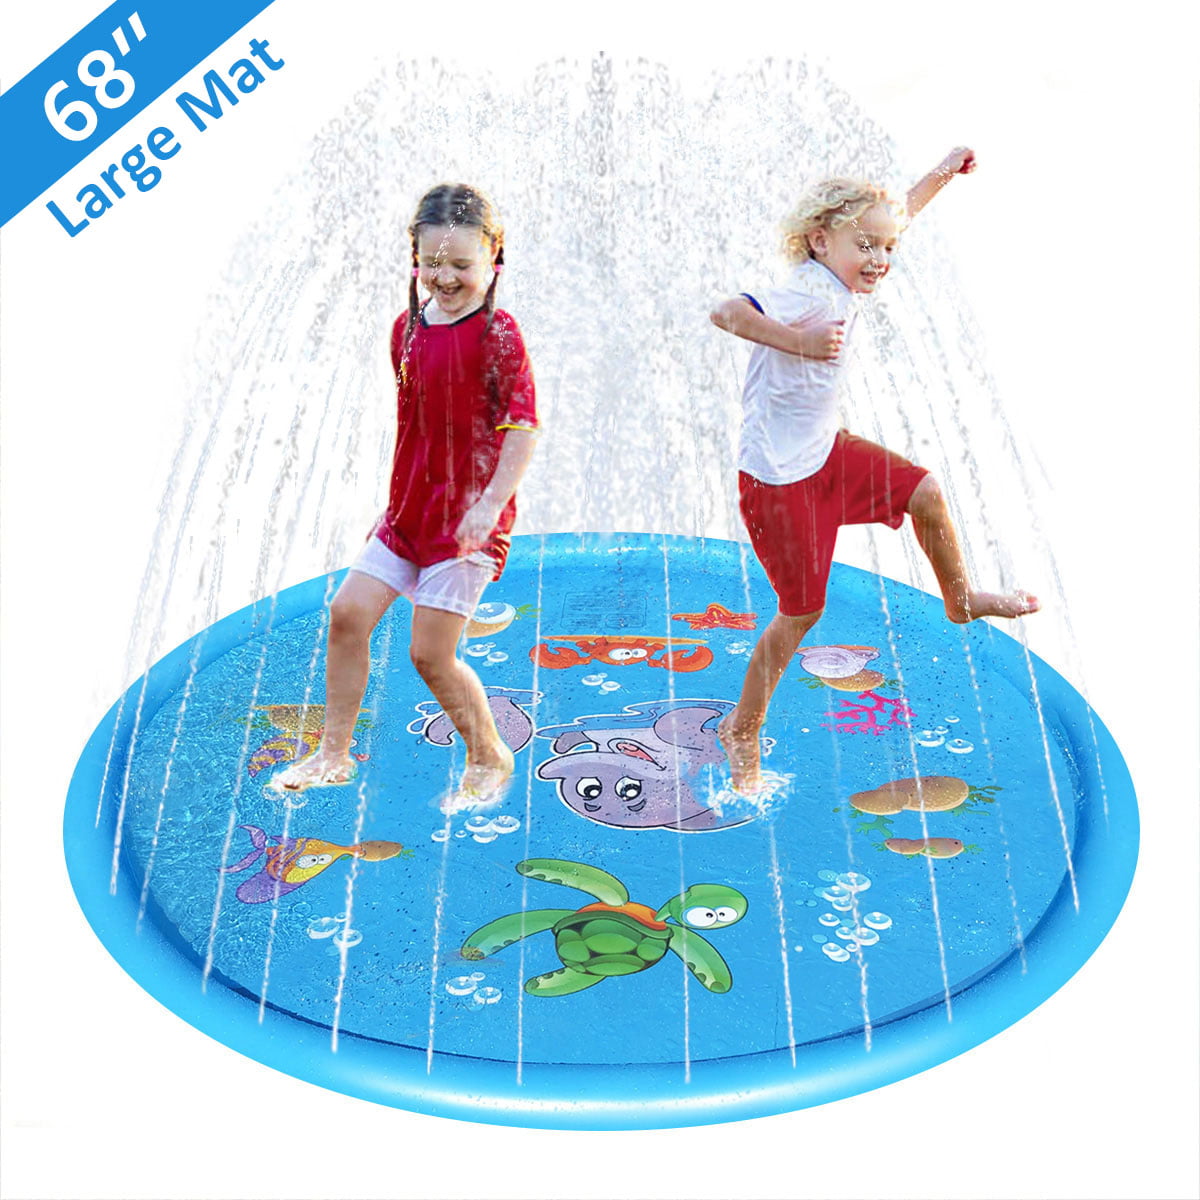 HOMOFY Large 68 Splash Pad Outdoor Toys for Kids Sprinkler Water Toys for 2 3 4 5 Years Old Boys Girls Toddlers,Outside Party Sprinkler Splash Play Mat 